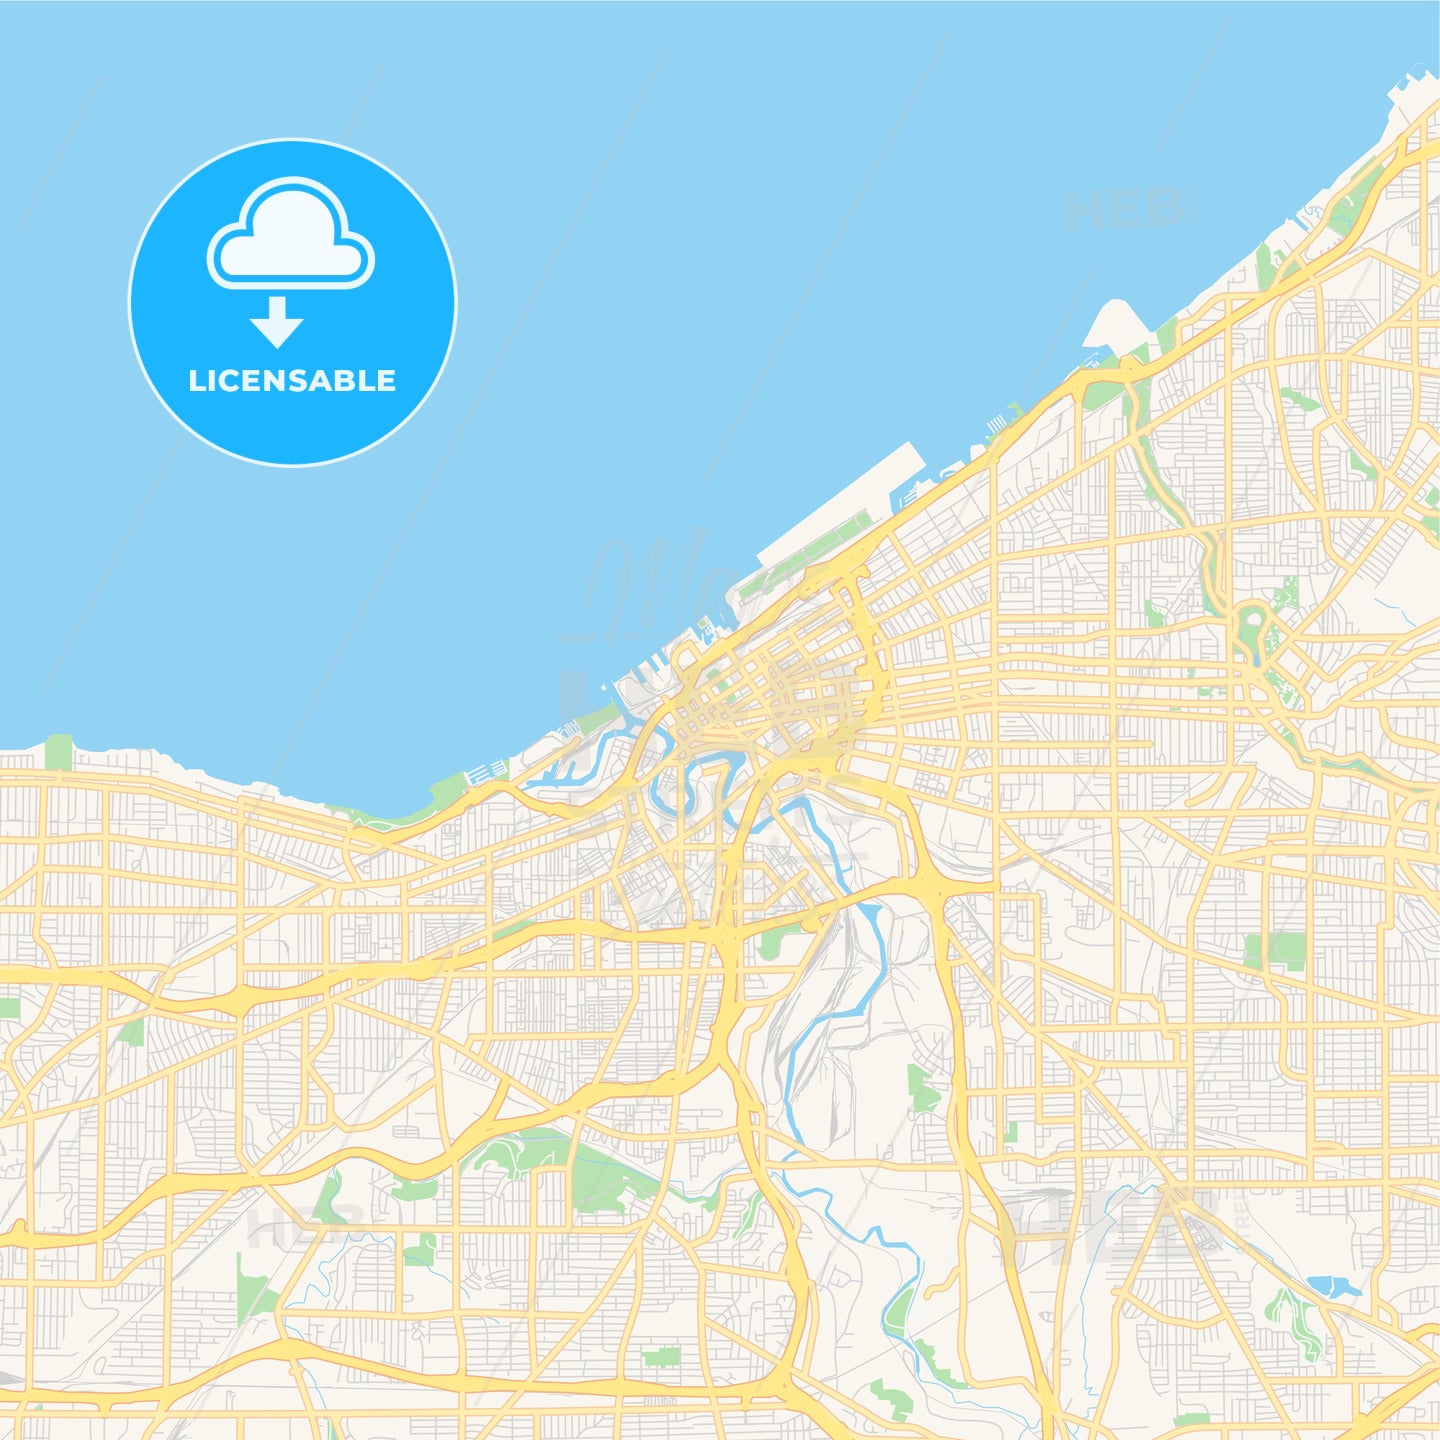 Empty vector map of Cleveland, Ohio, USA